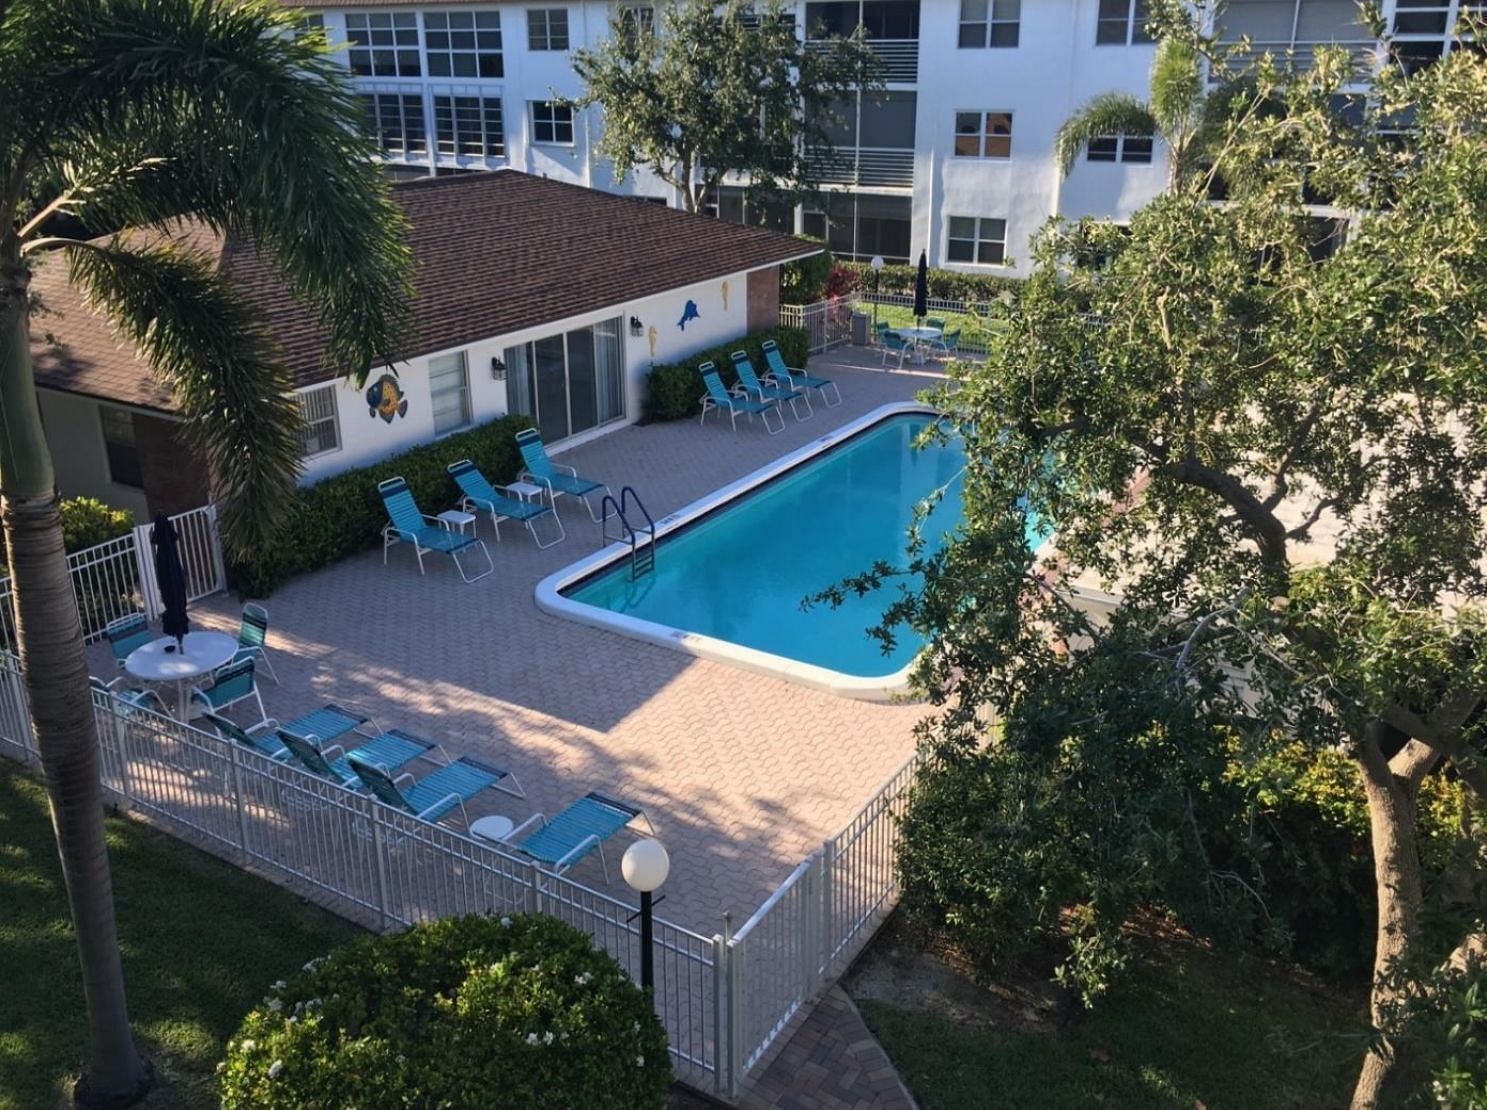 JWguest Condominium at Lauderdale-by-the-Sea, Florida | Pompano 5 minute walk to the beach | Jwbnb no brobnb 5